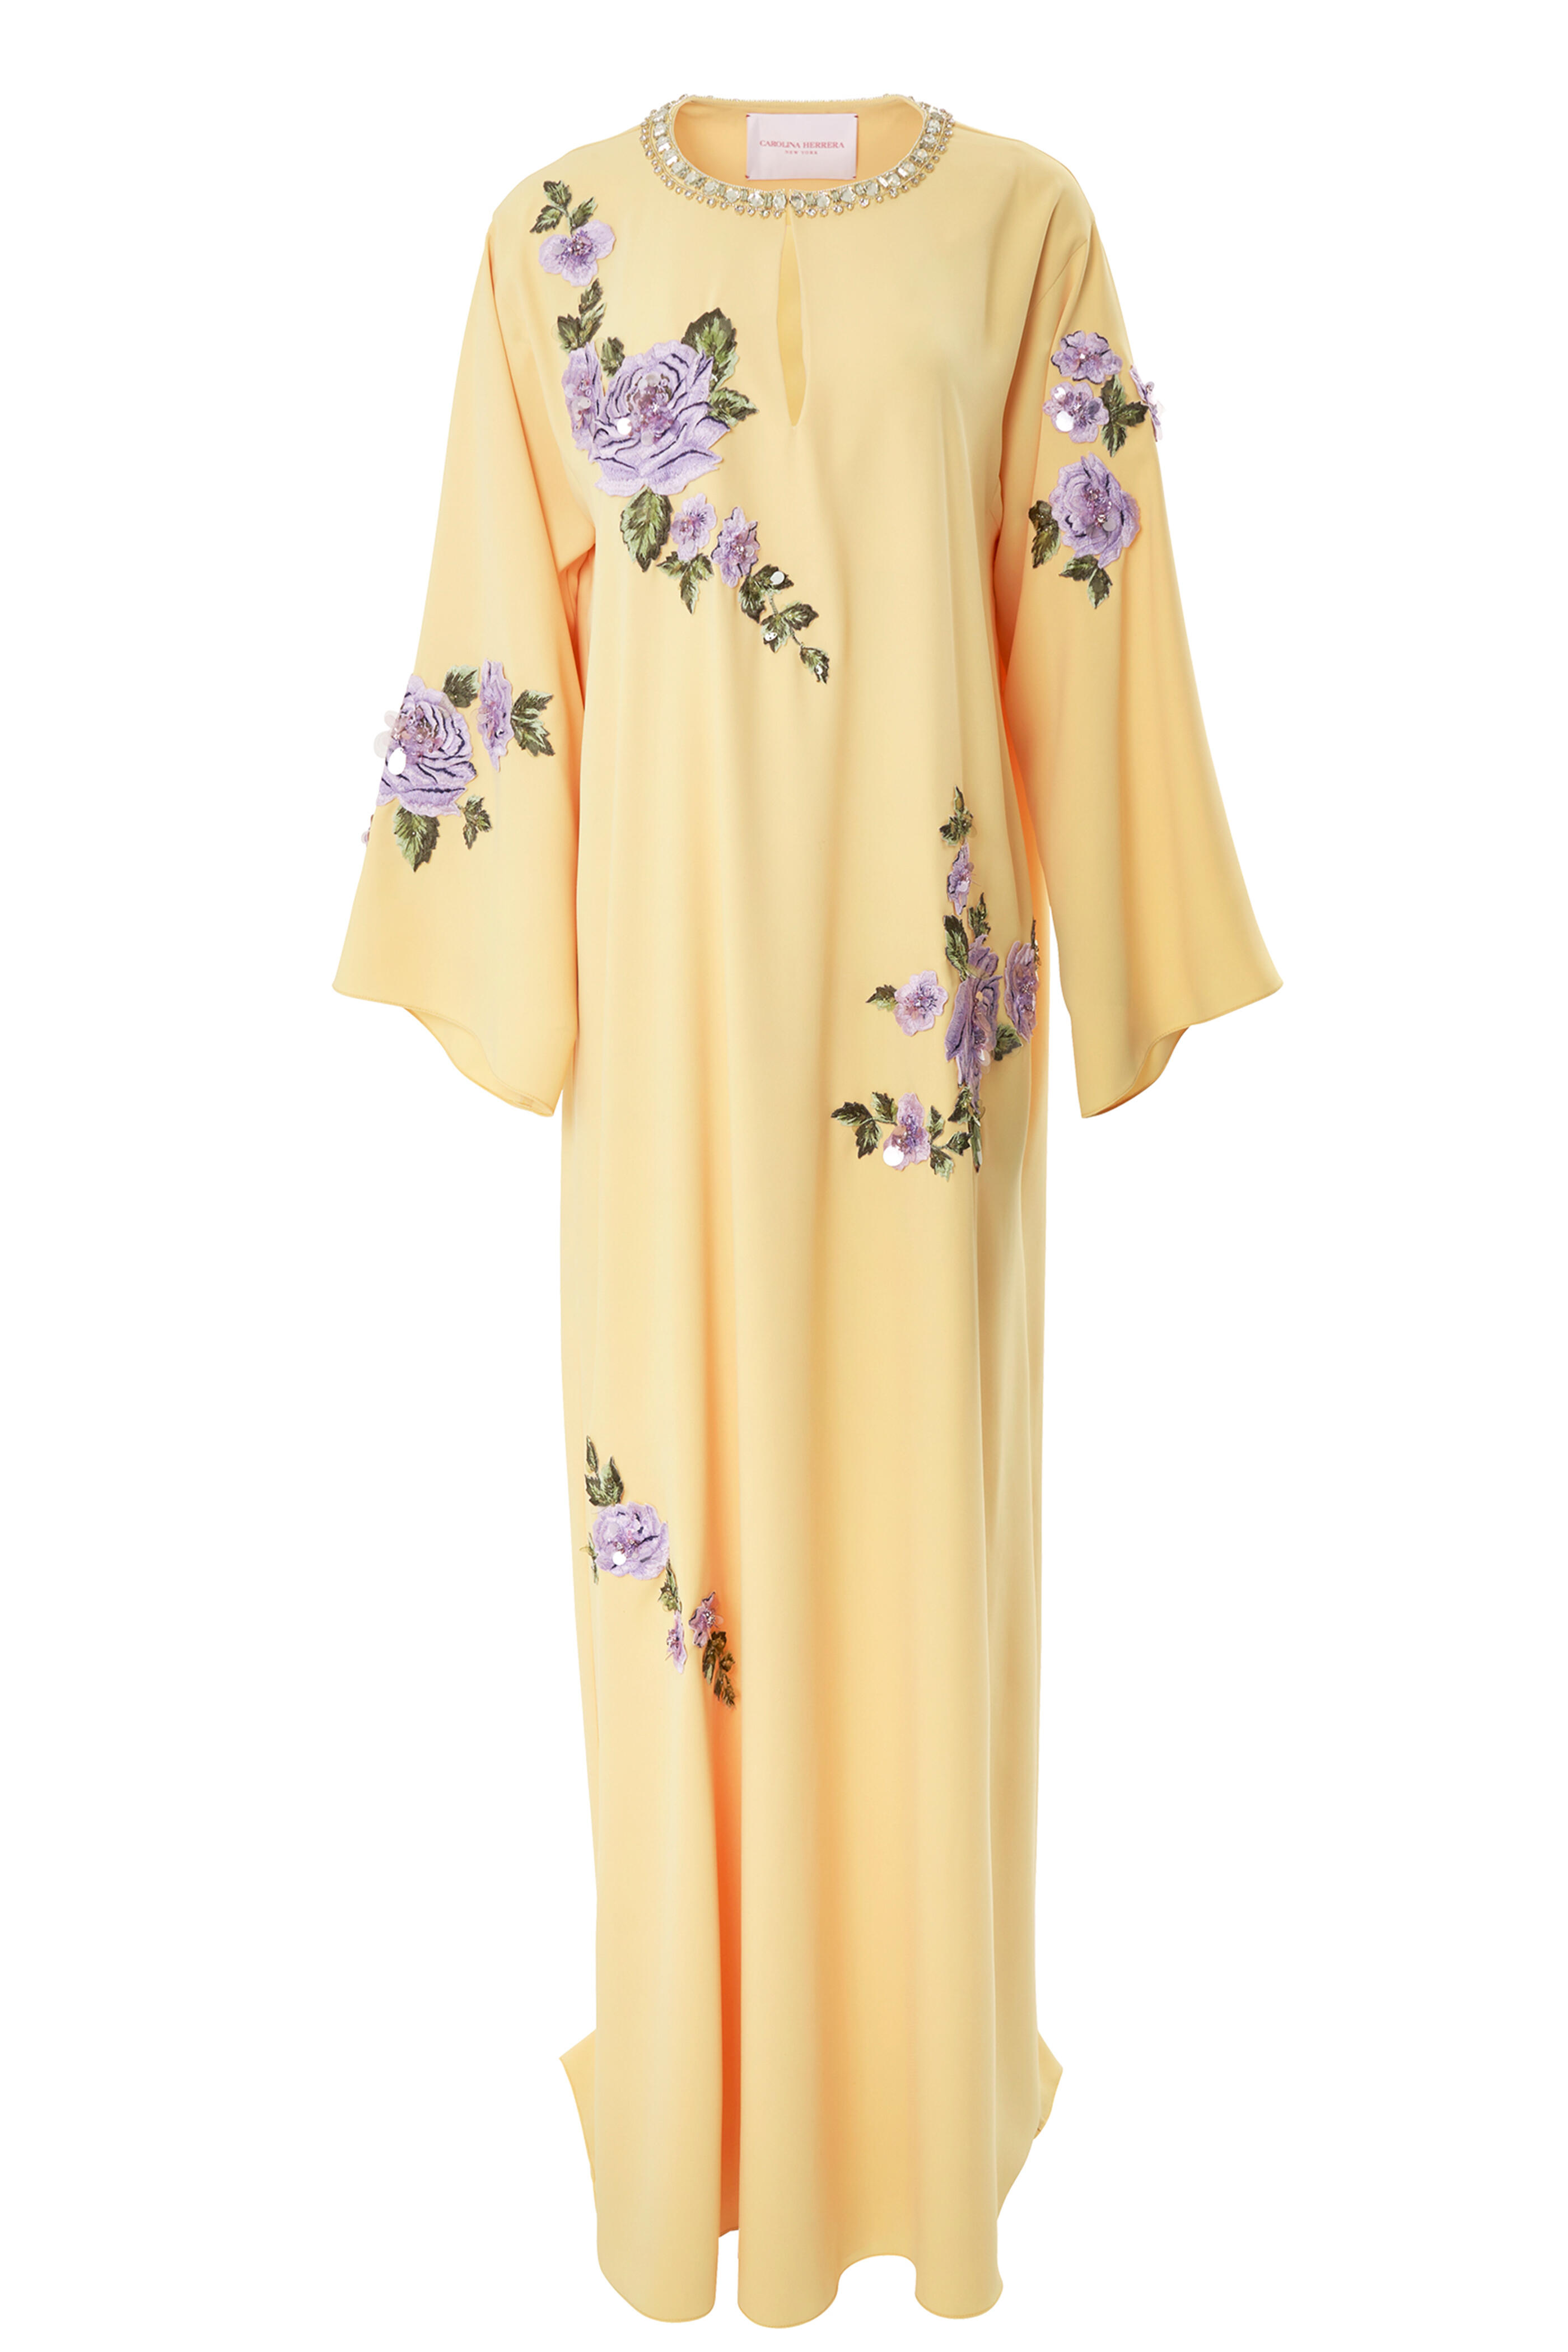 Carolina Herrera Women's Sunshine Pale Yellow Embellished Caftan | S by Mitchell Stores